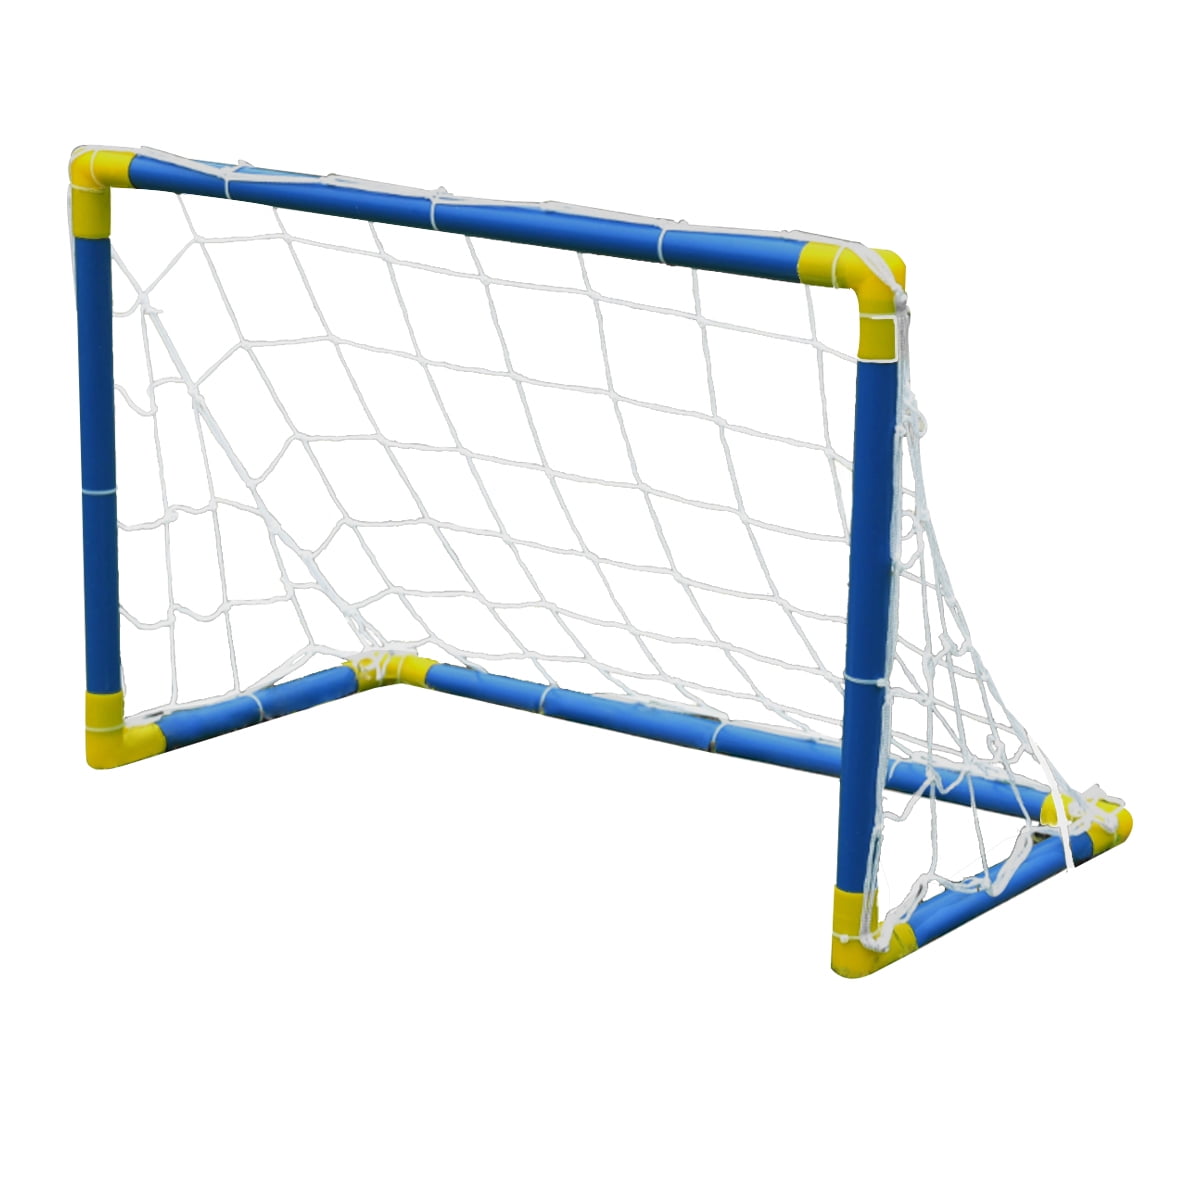 RuiyiF 2-In-1 Soccer Goal Net Ice Hockey Puck Set for Kids Toddlers Indoor Outdoor Backyard Kids Soccer Goal 